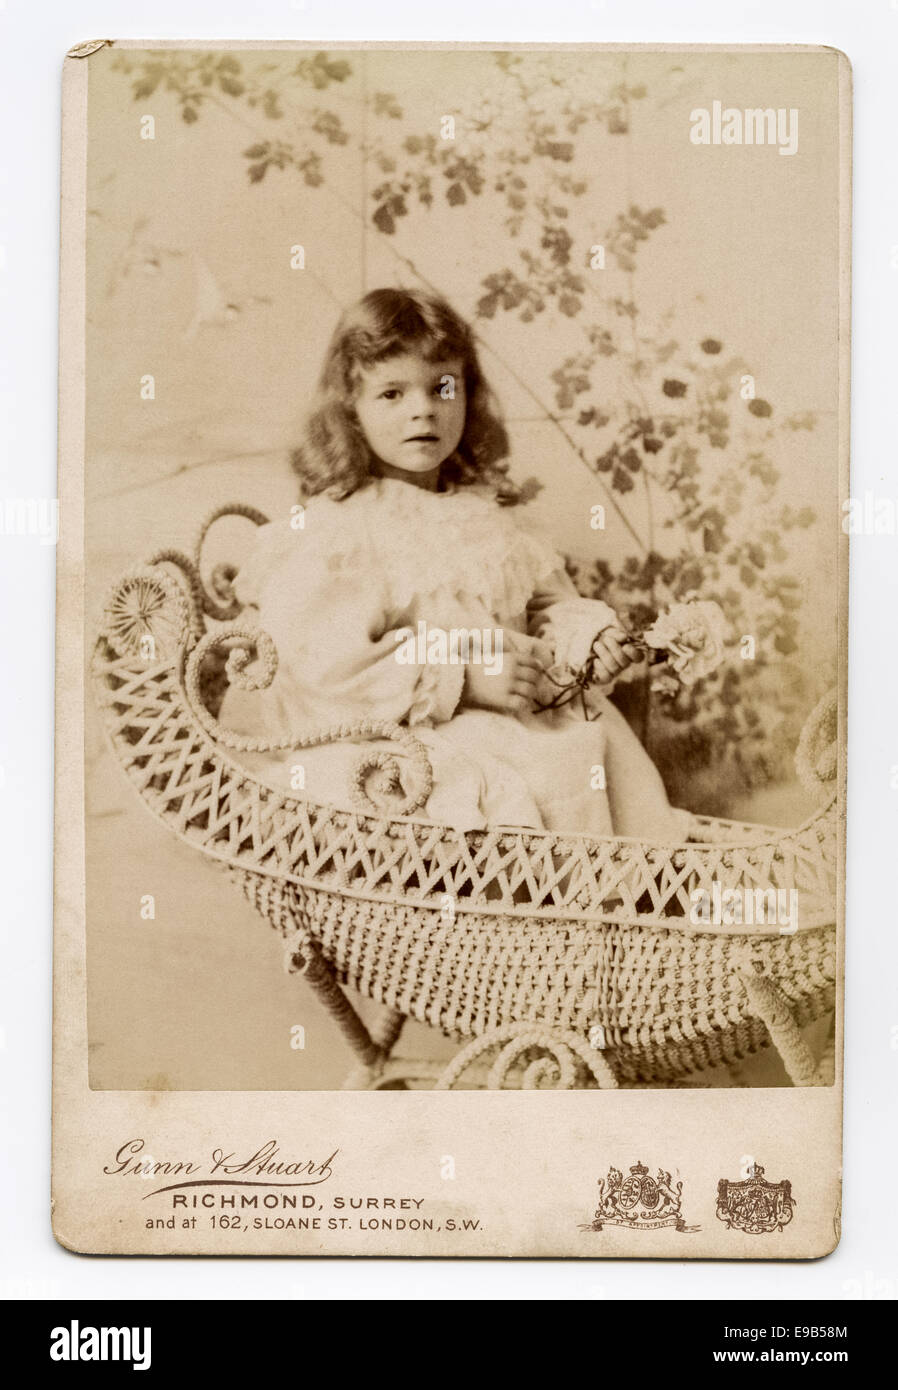 Victorian Cabinet Card studio portrait of young girl from the Gunn & Stuart studio. Taken around 1890 Stock Photo